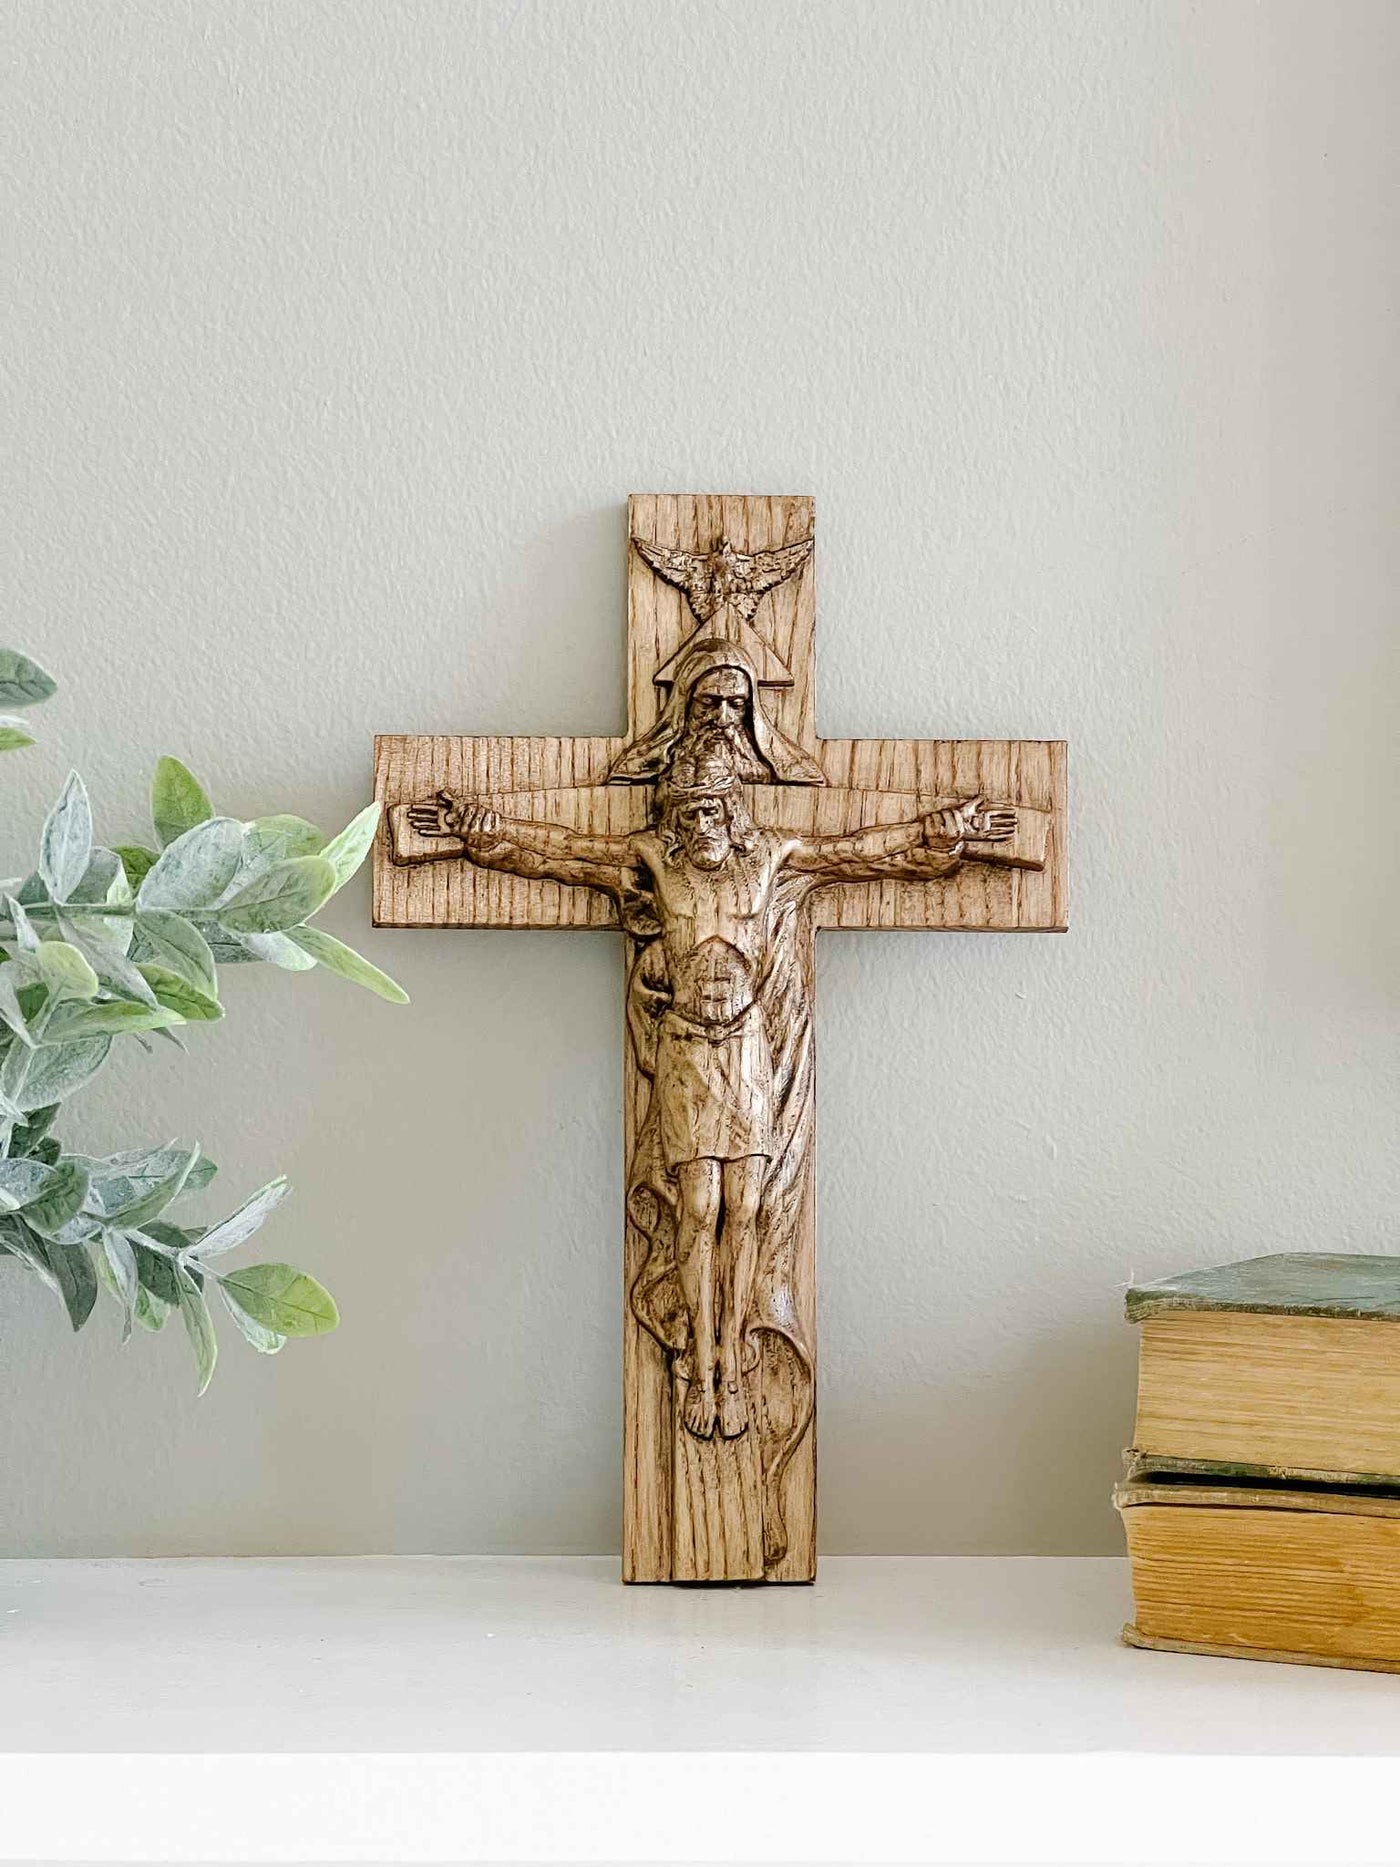 Holy Trinity Crucifix